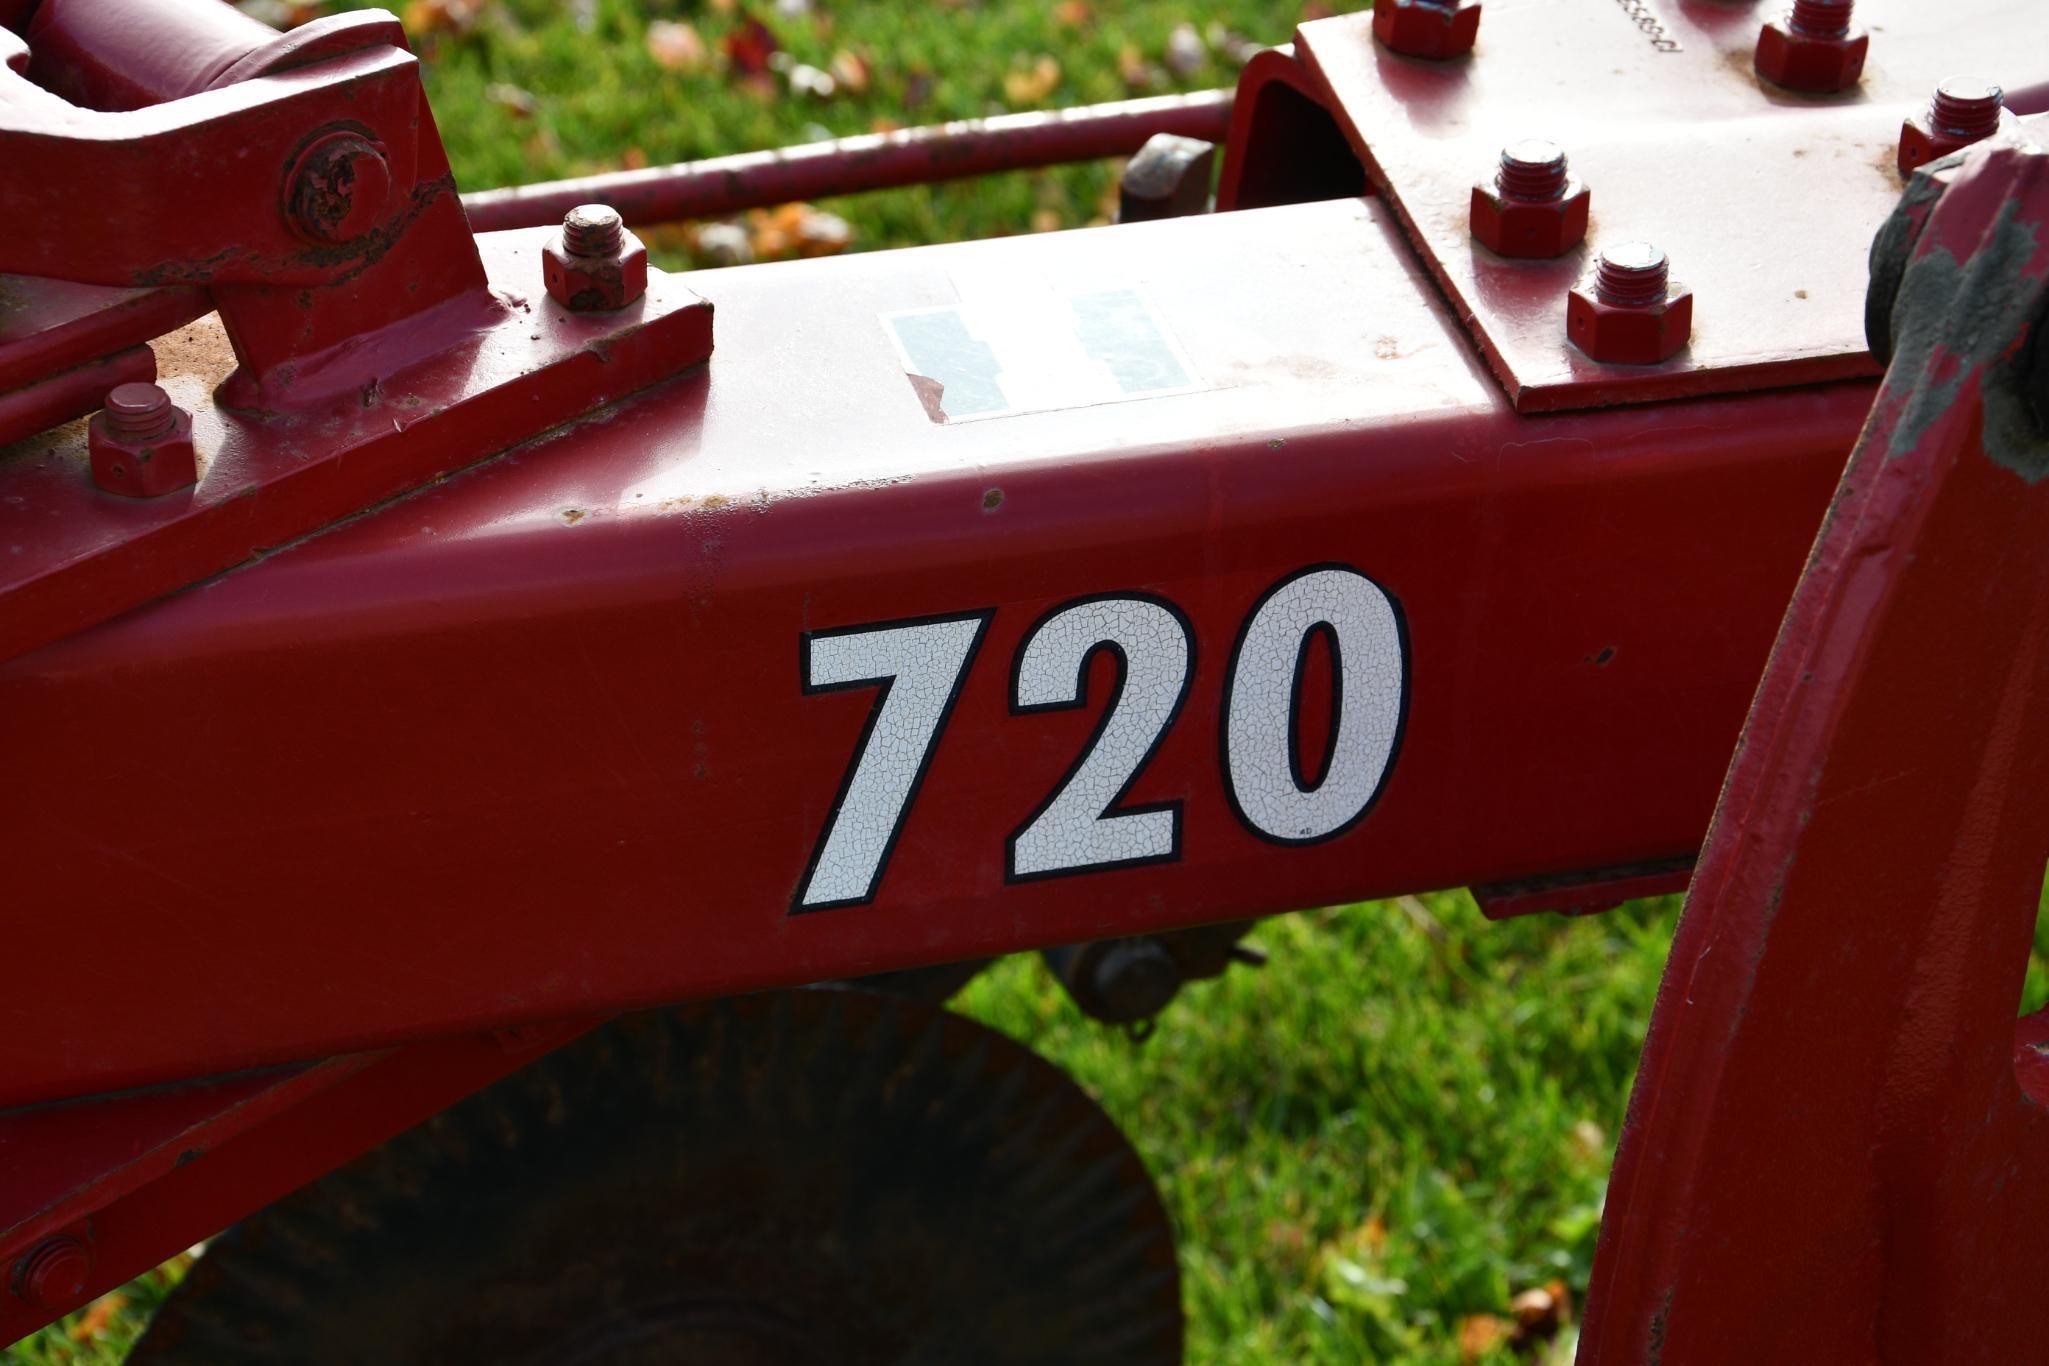 Case-IH 720 5-bottom plow